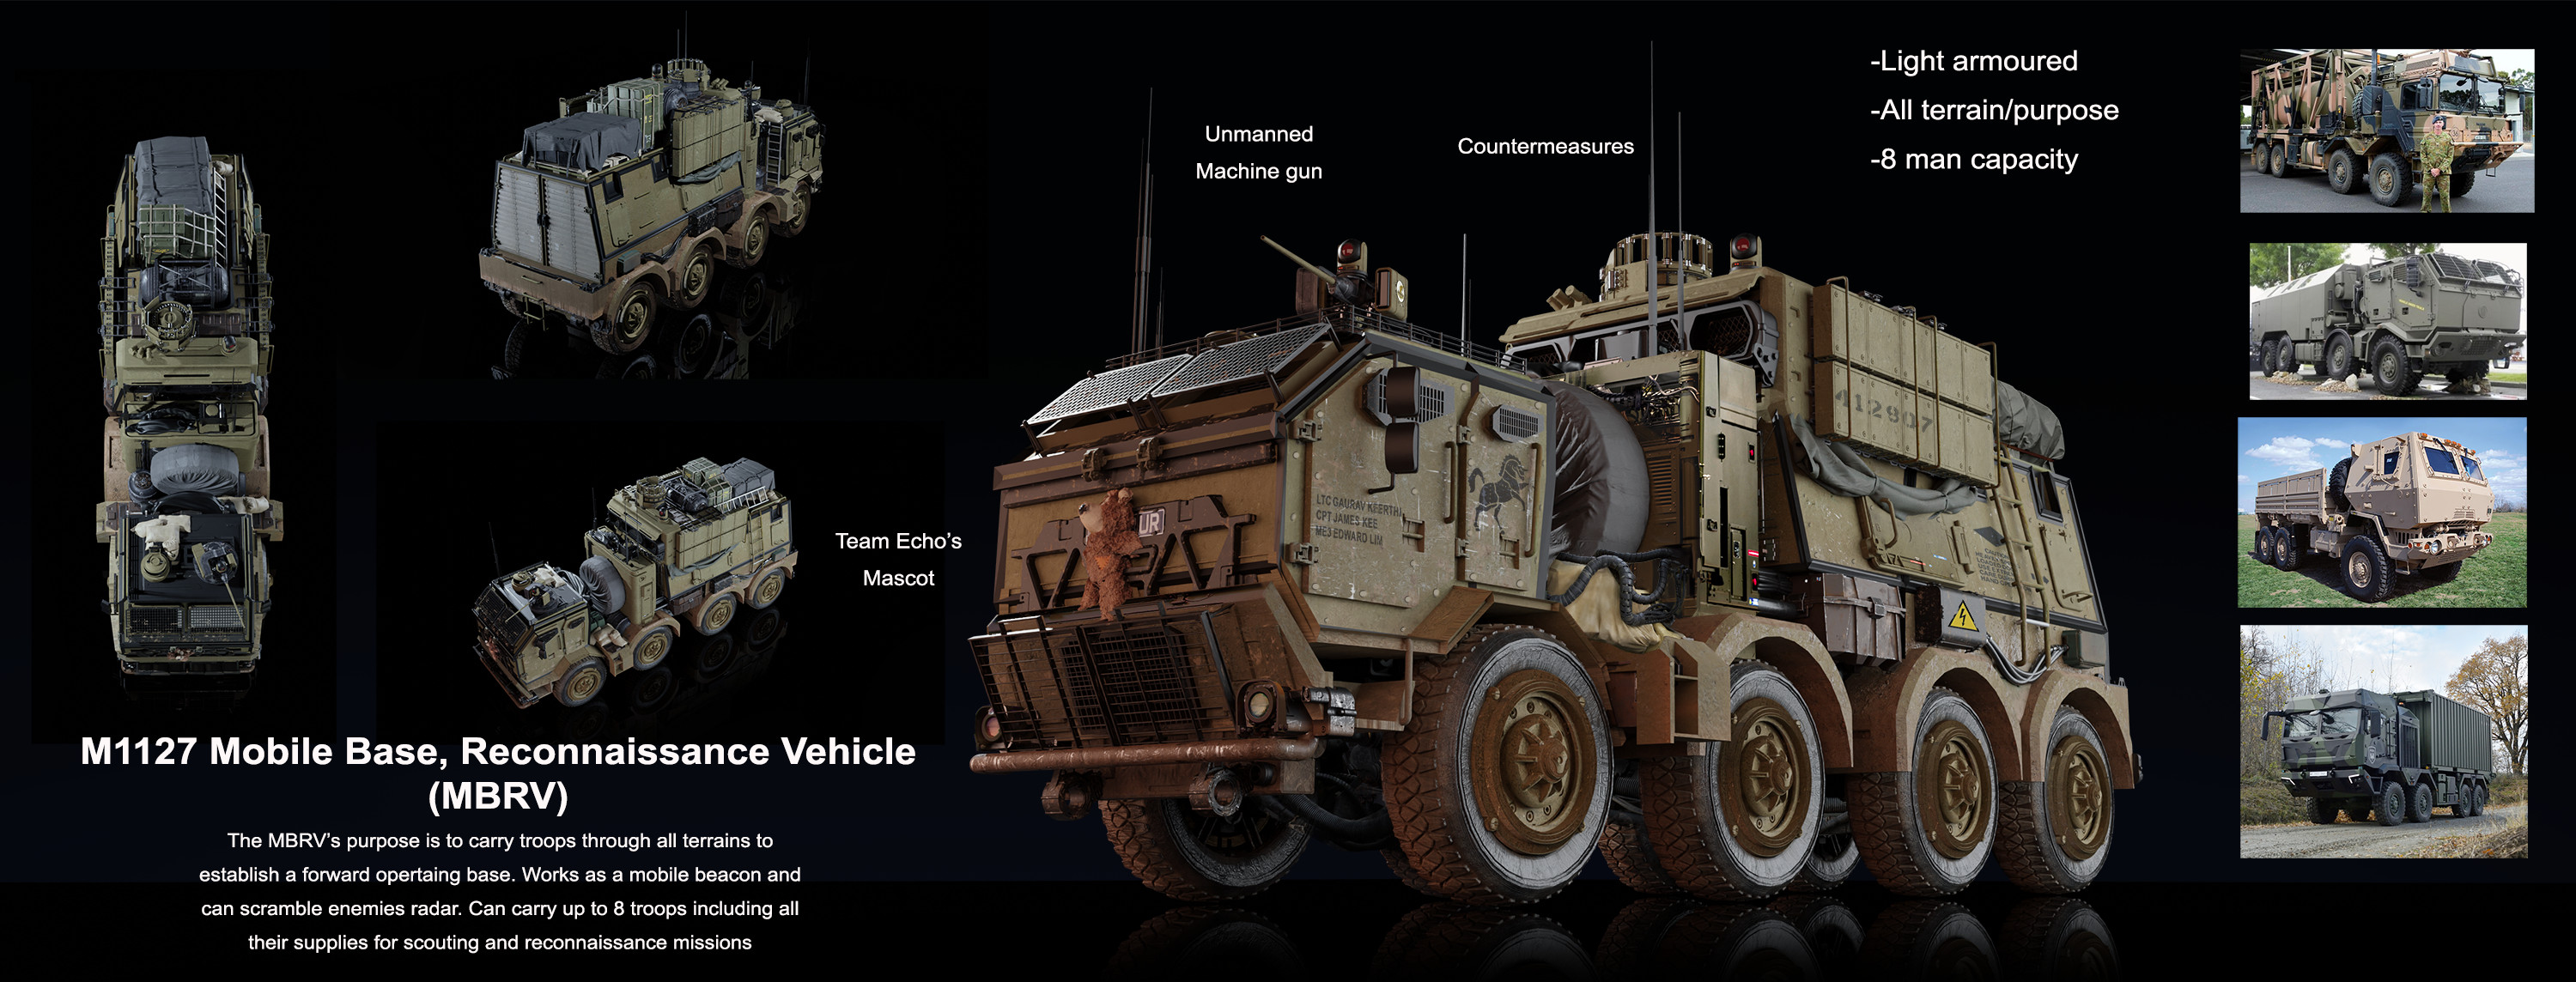 Harry Rowland - M1127 Mobile Base Reconnaissance Vehicle (MBRV)